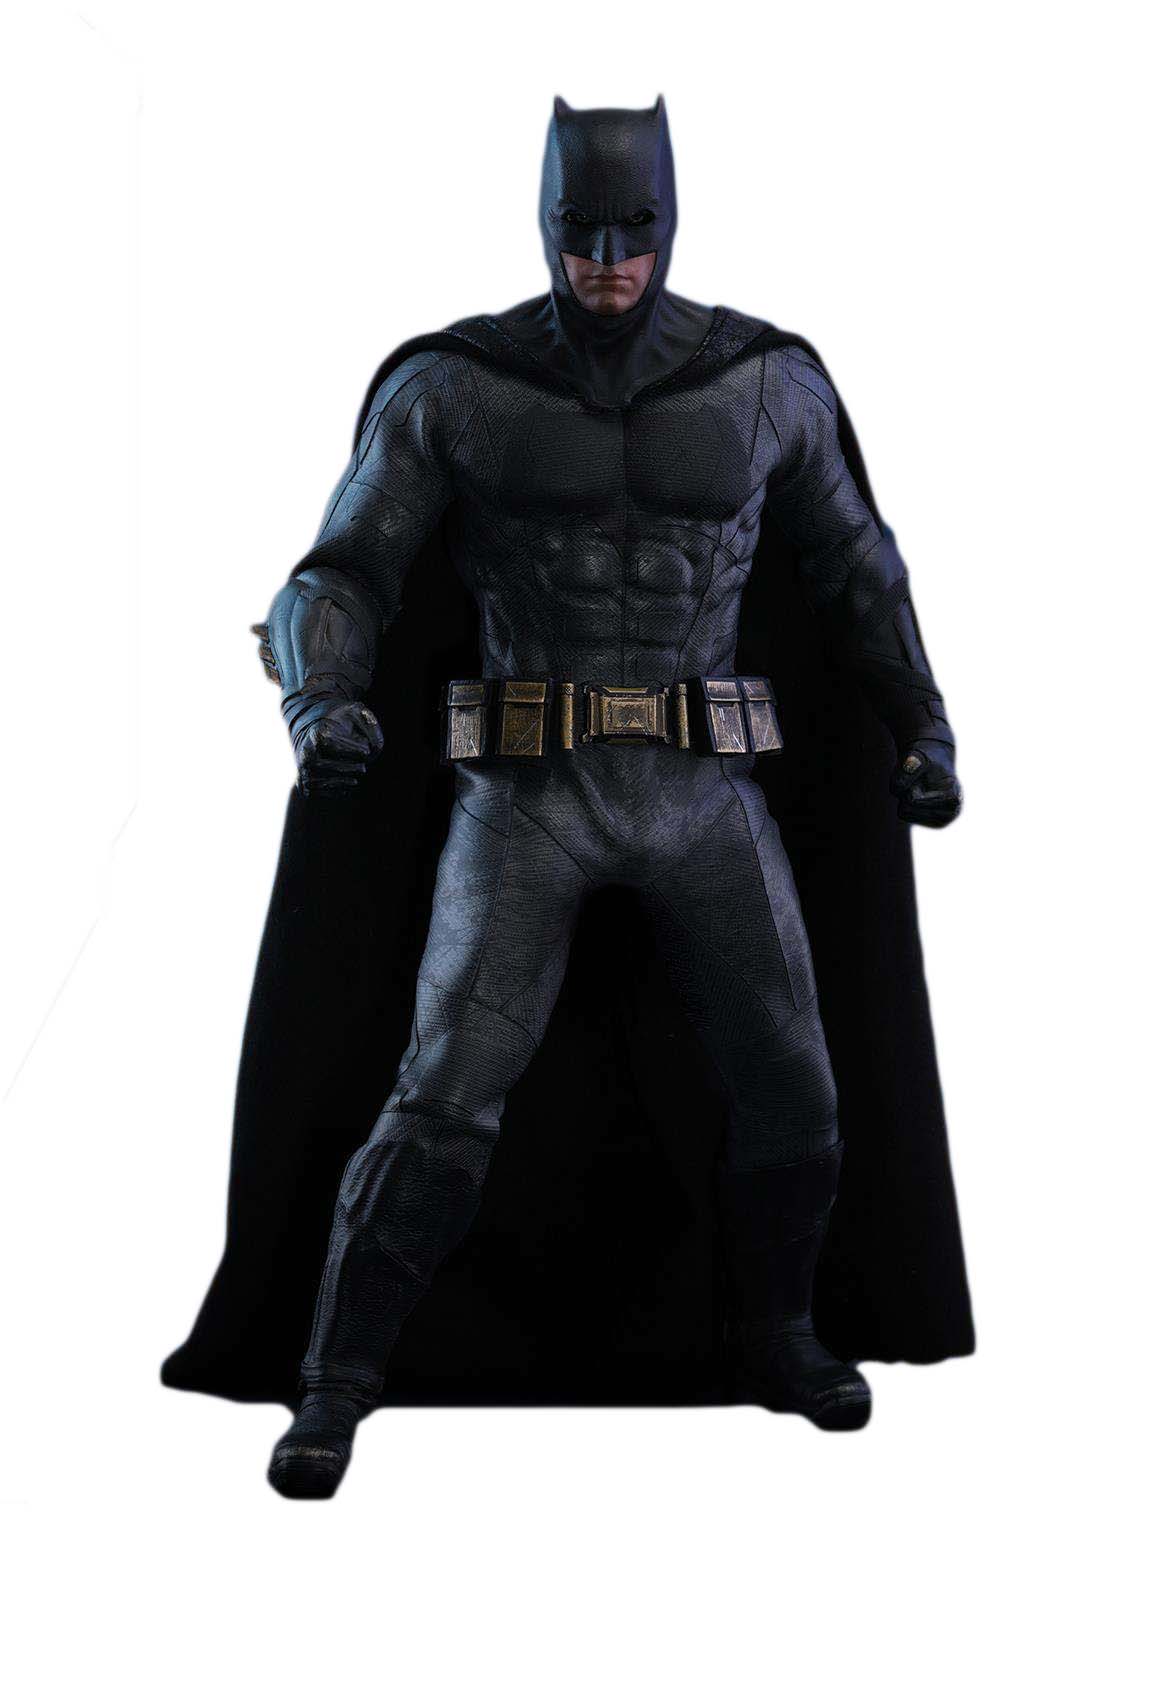 Hot Toys DC Justice League Movie Batman Regular Version Collectible Figure